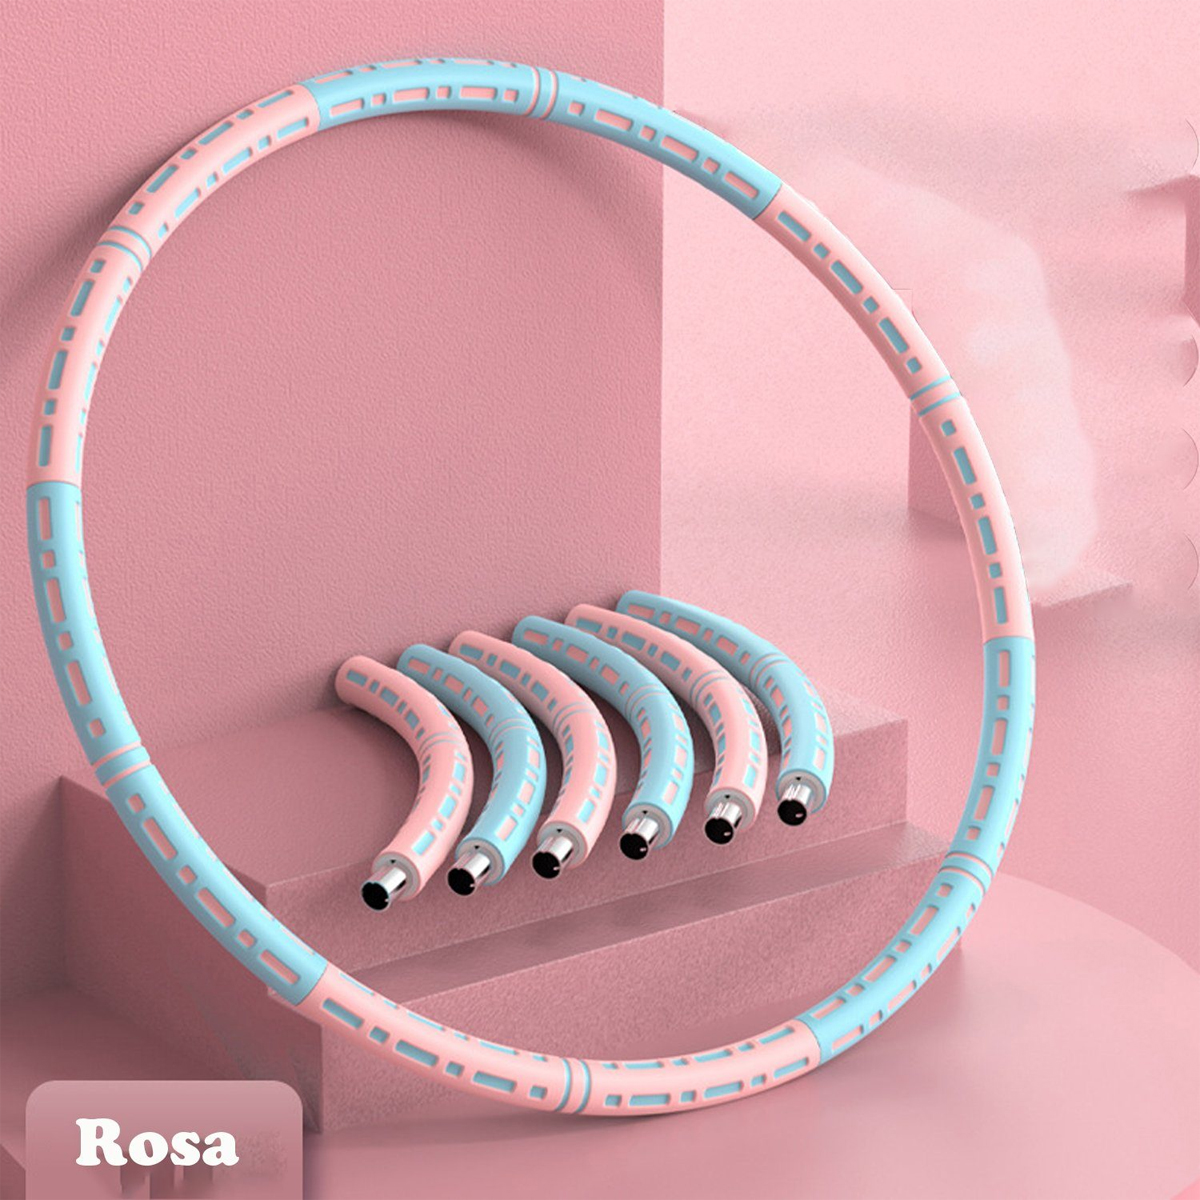 Schnitte,Abnehmbar,Fitness-Reifen,Hula anspruch LEIGO Hoop Blau-Pink jeden für Hula-Hoop-Reifen,6 Hula-Hoop-Reifen,